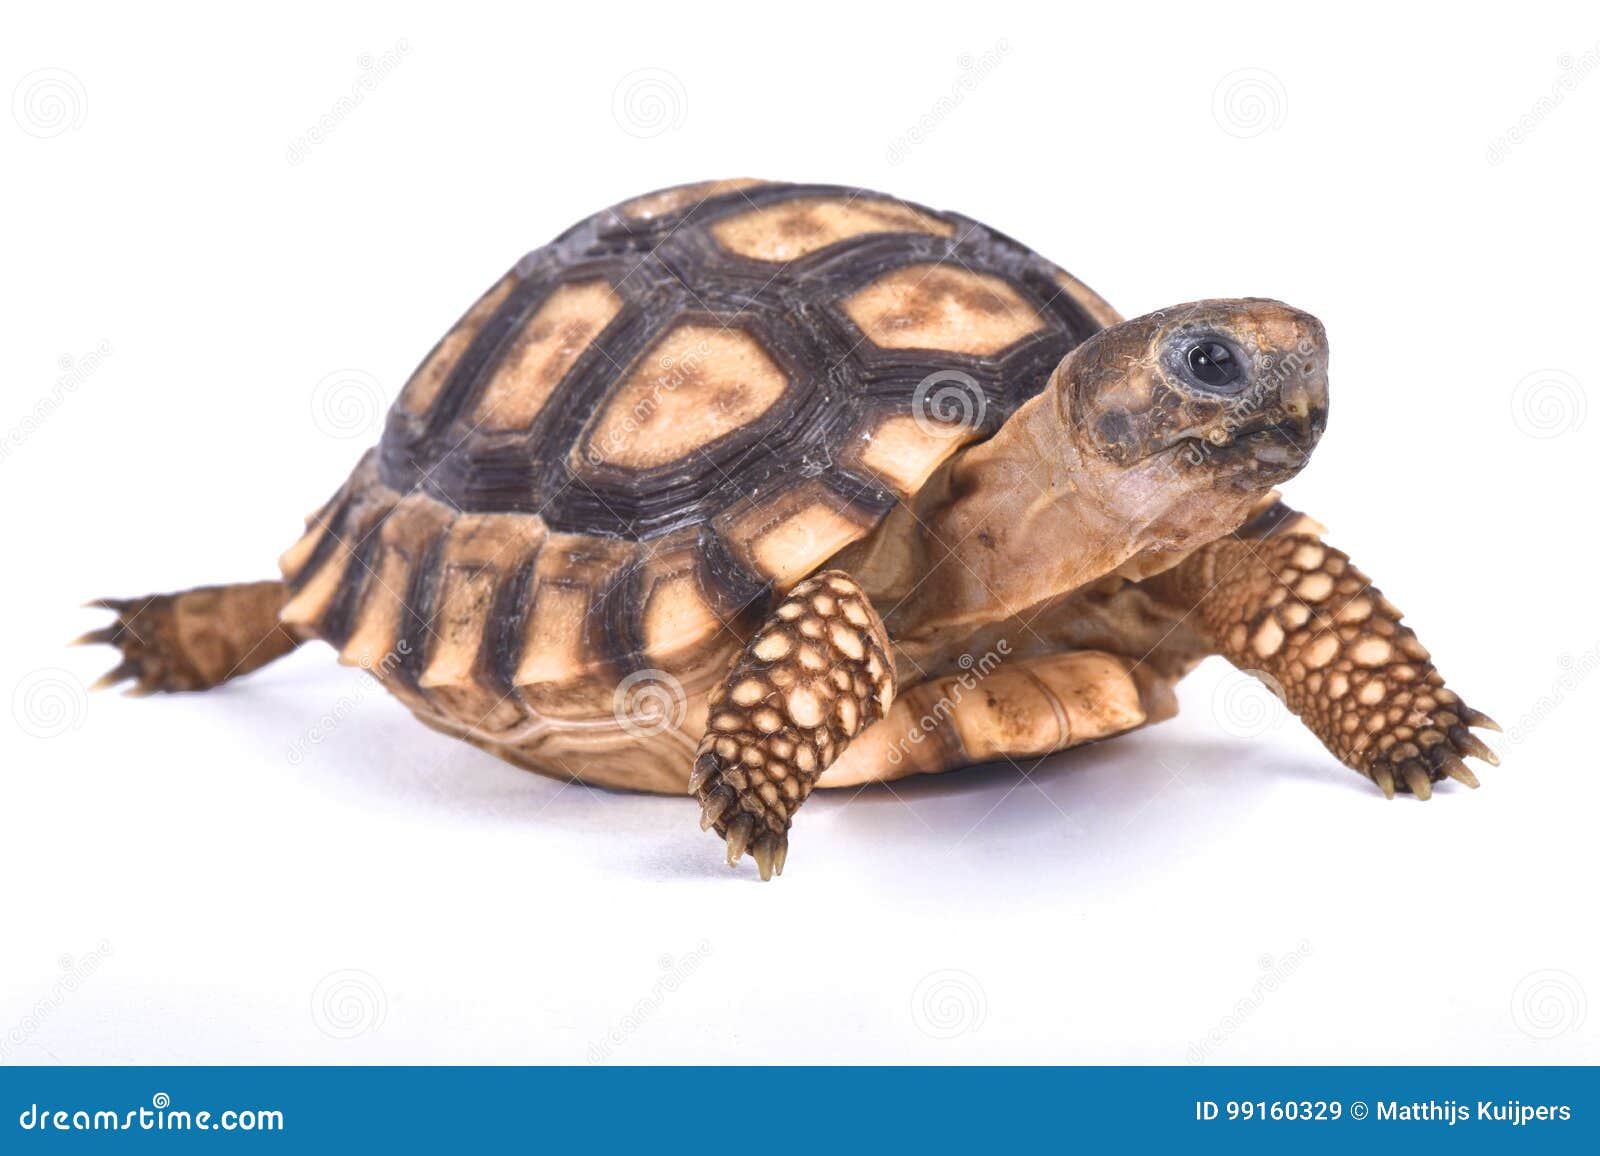 chaco tortoise, chelonoidis chilensis